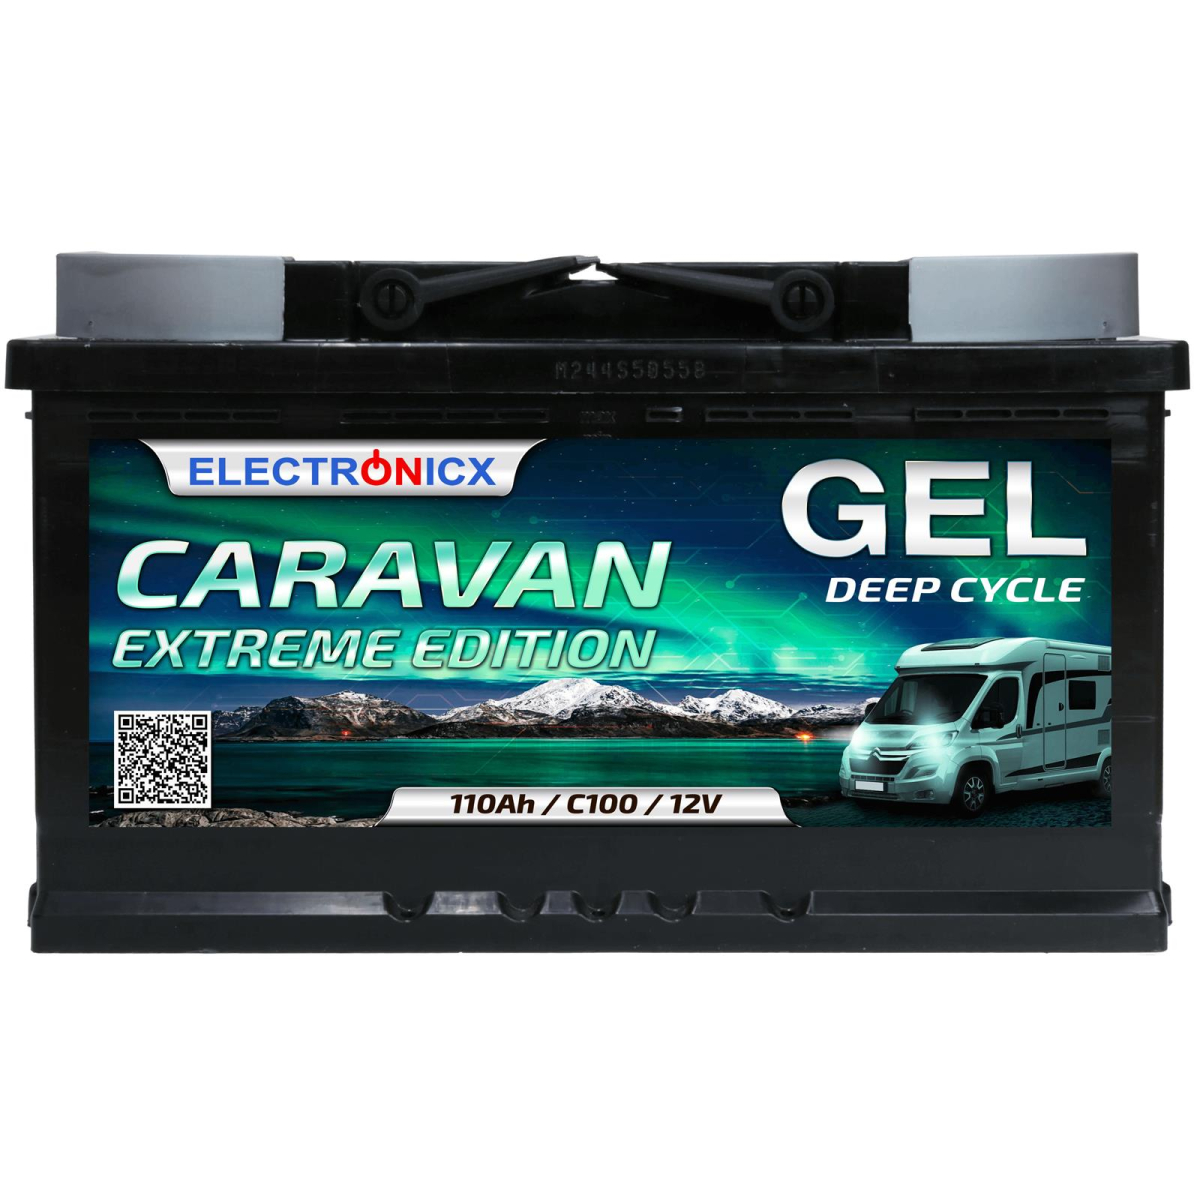 Electronicx Caravan EXTREME Edition Gel Batterie 110 AH 12V Wohnmobil Boot Versorgung